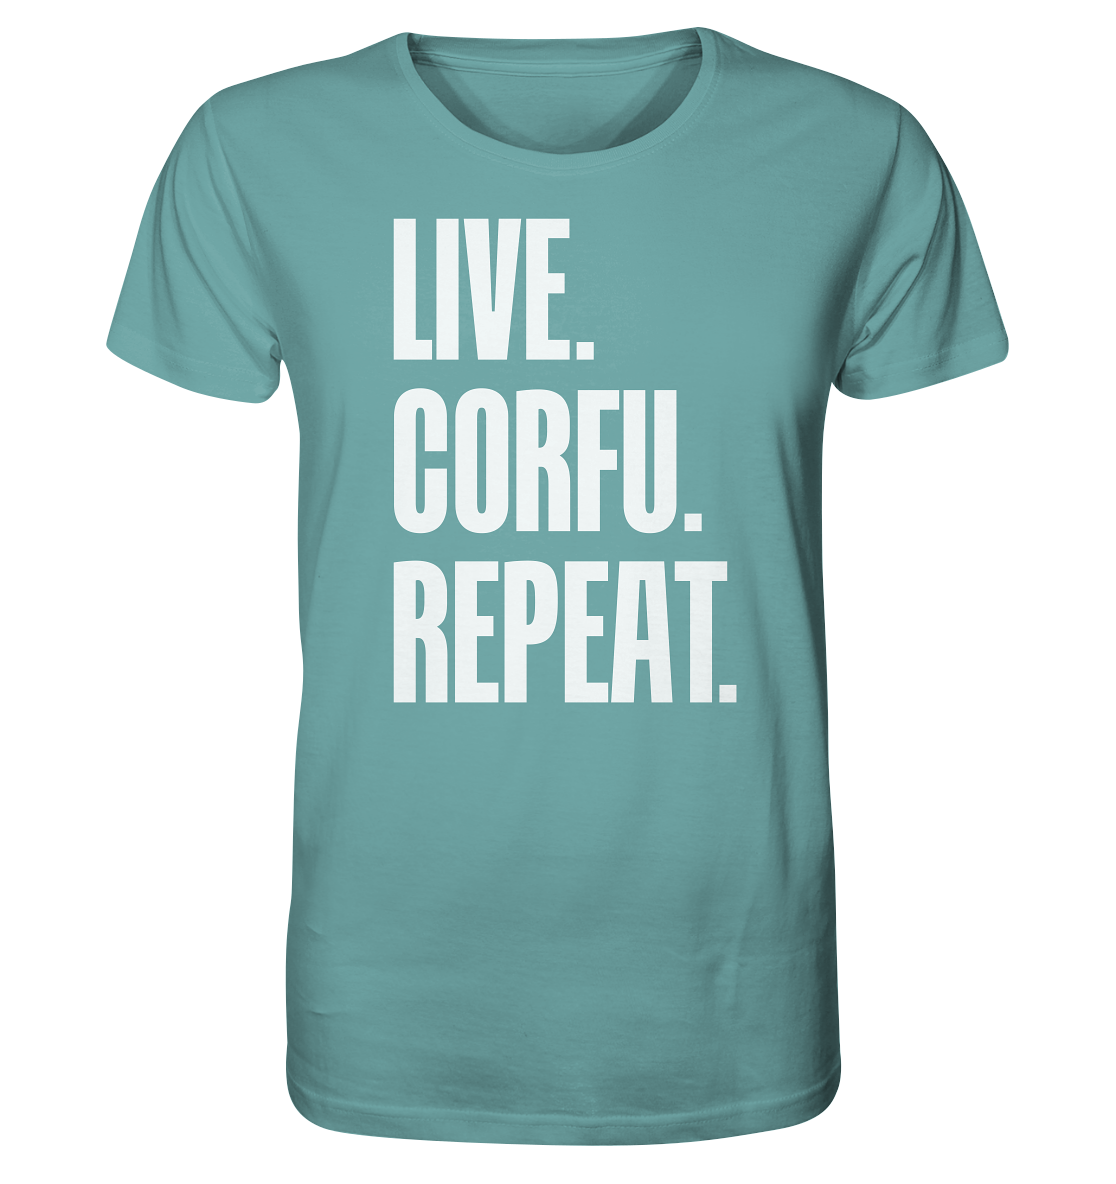 LIVE. CORFU. REPEAT. - Organic Shirt